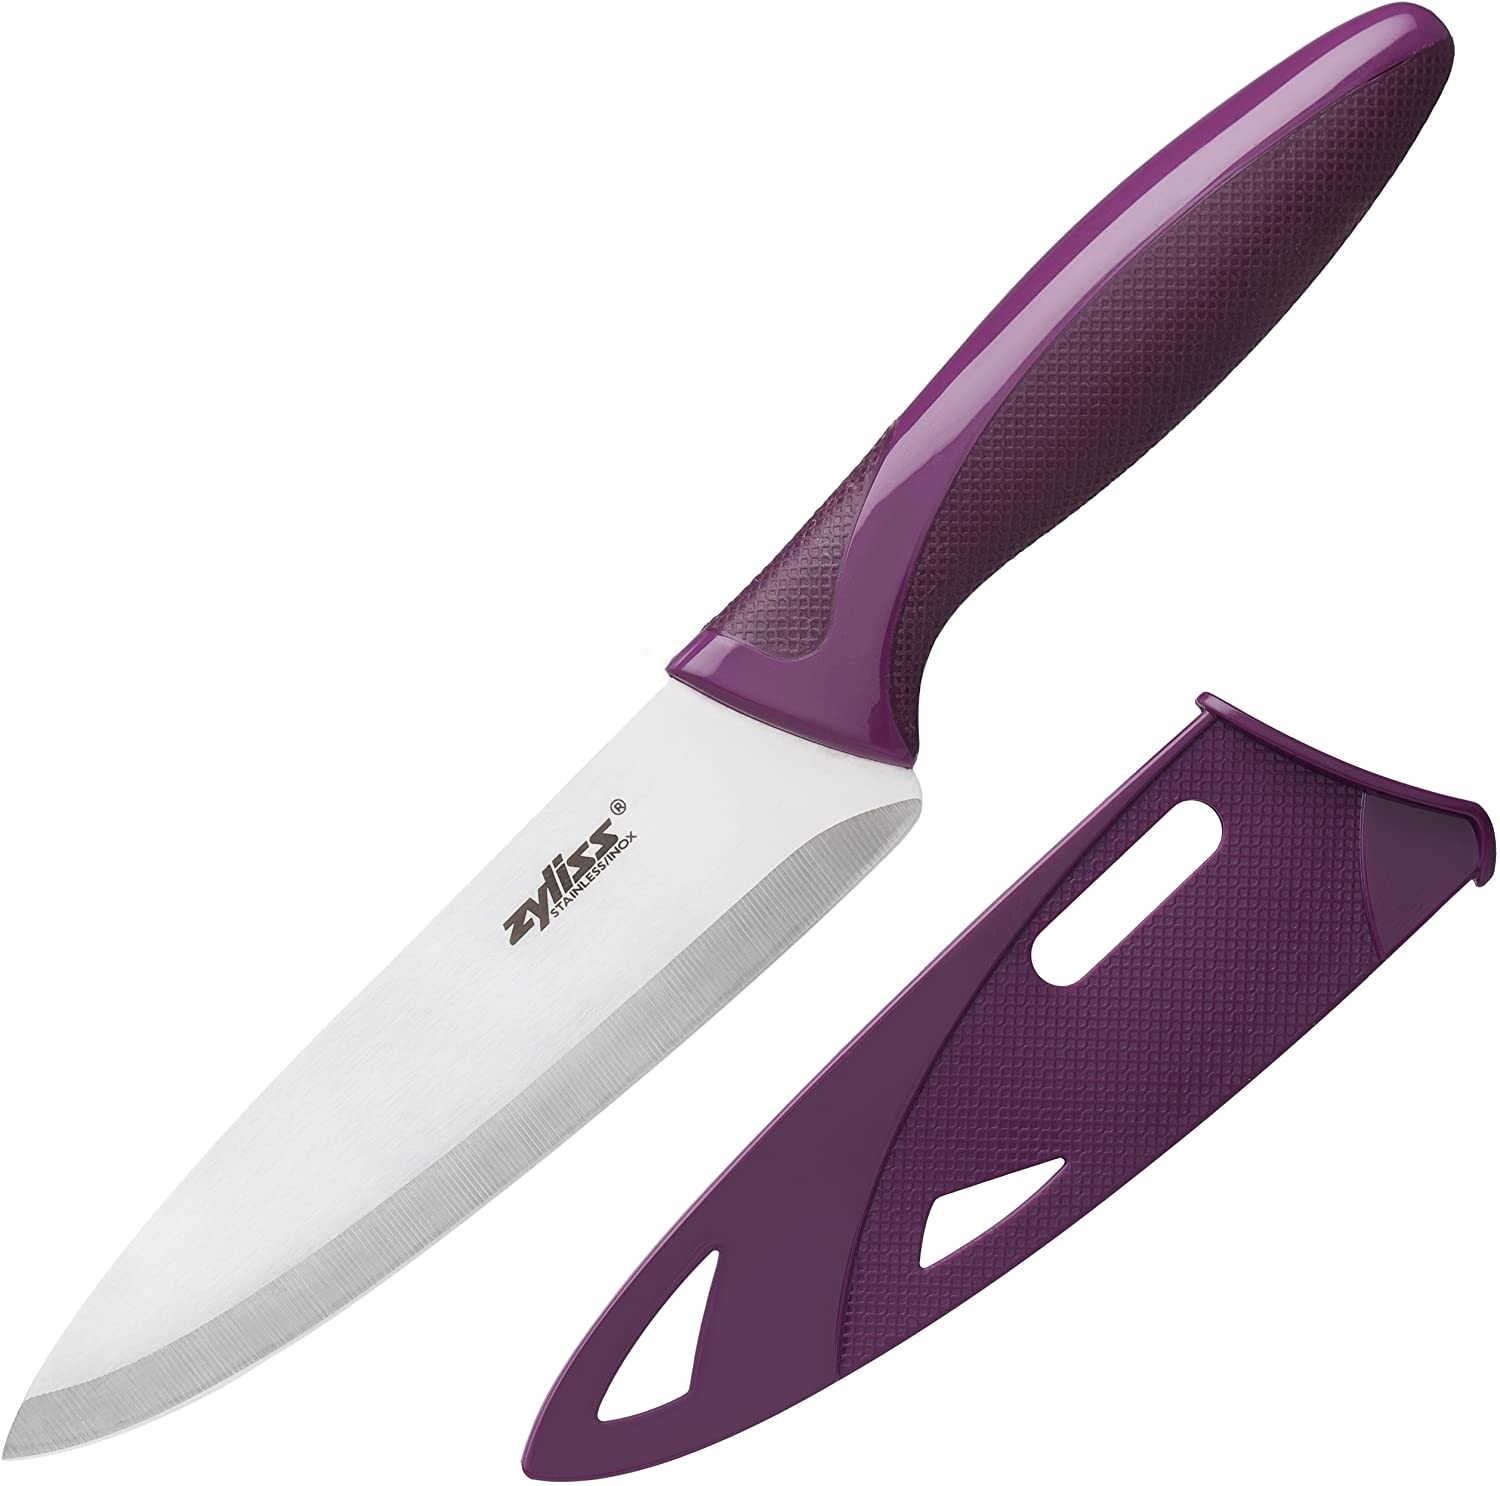 ZYLISS Utility Paring Kitchen Knife, 5.5-Inch